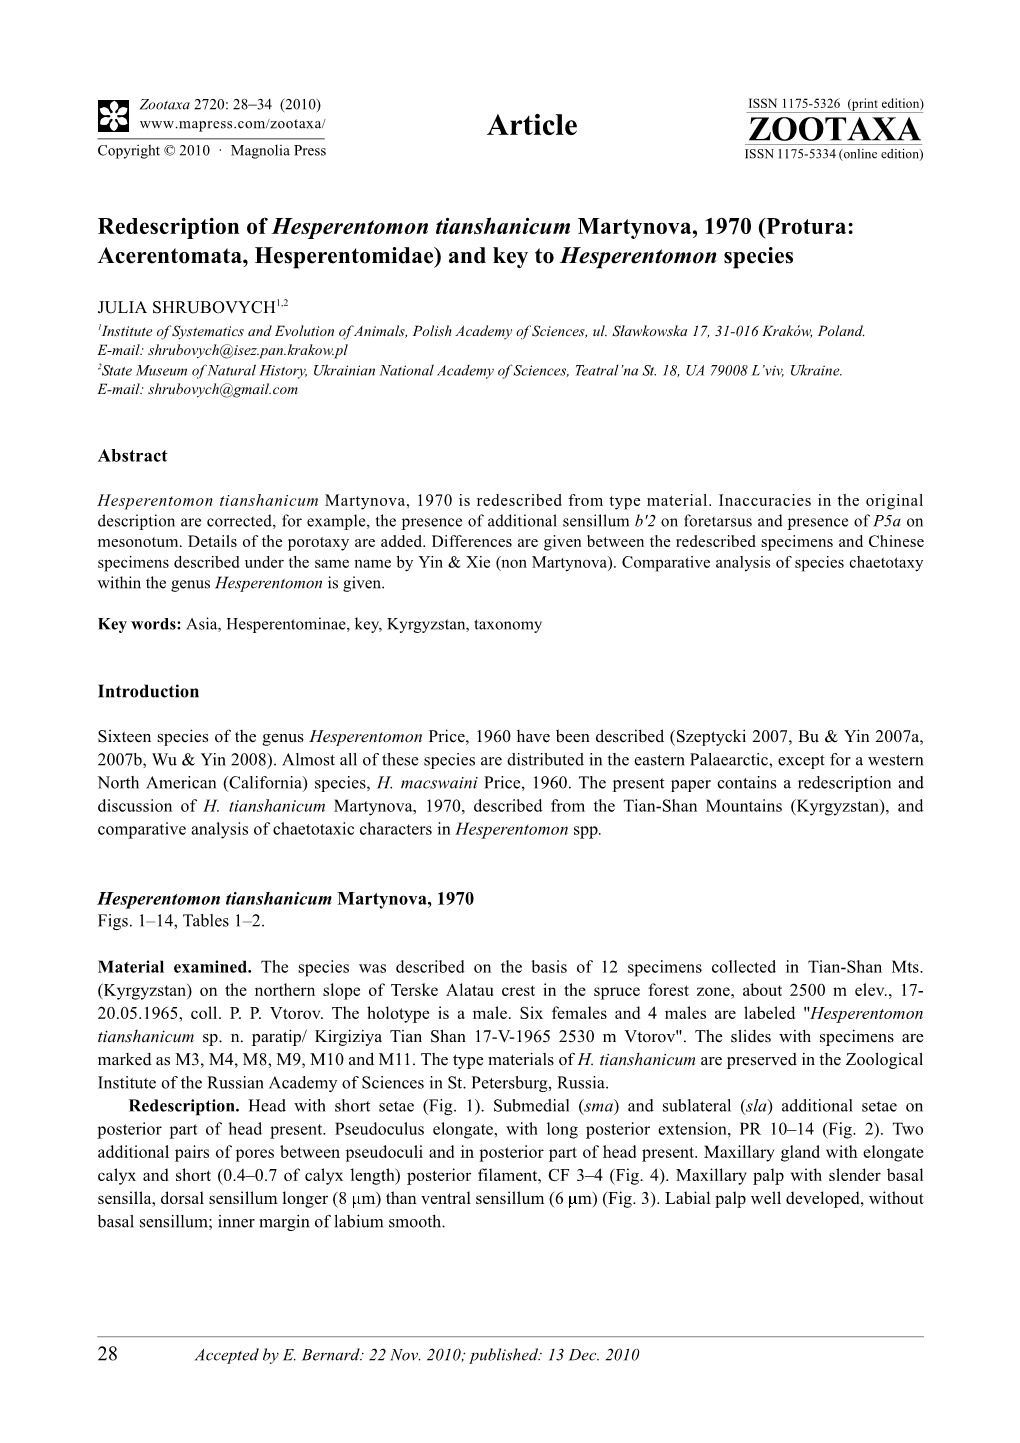 Redescription of Hesperentomon Tianshanicum Martynova, 1970 (Protura: Acerentomata, Hesperentomidae) and Key to Hesperentomon Species